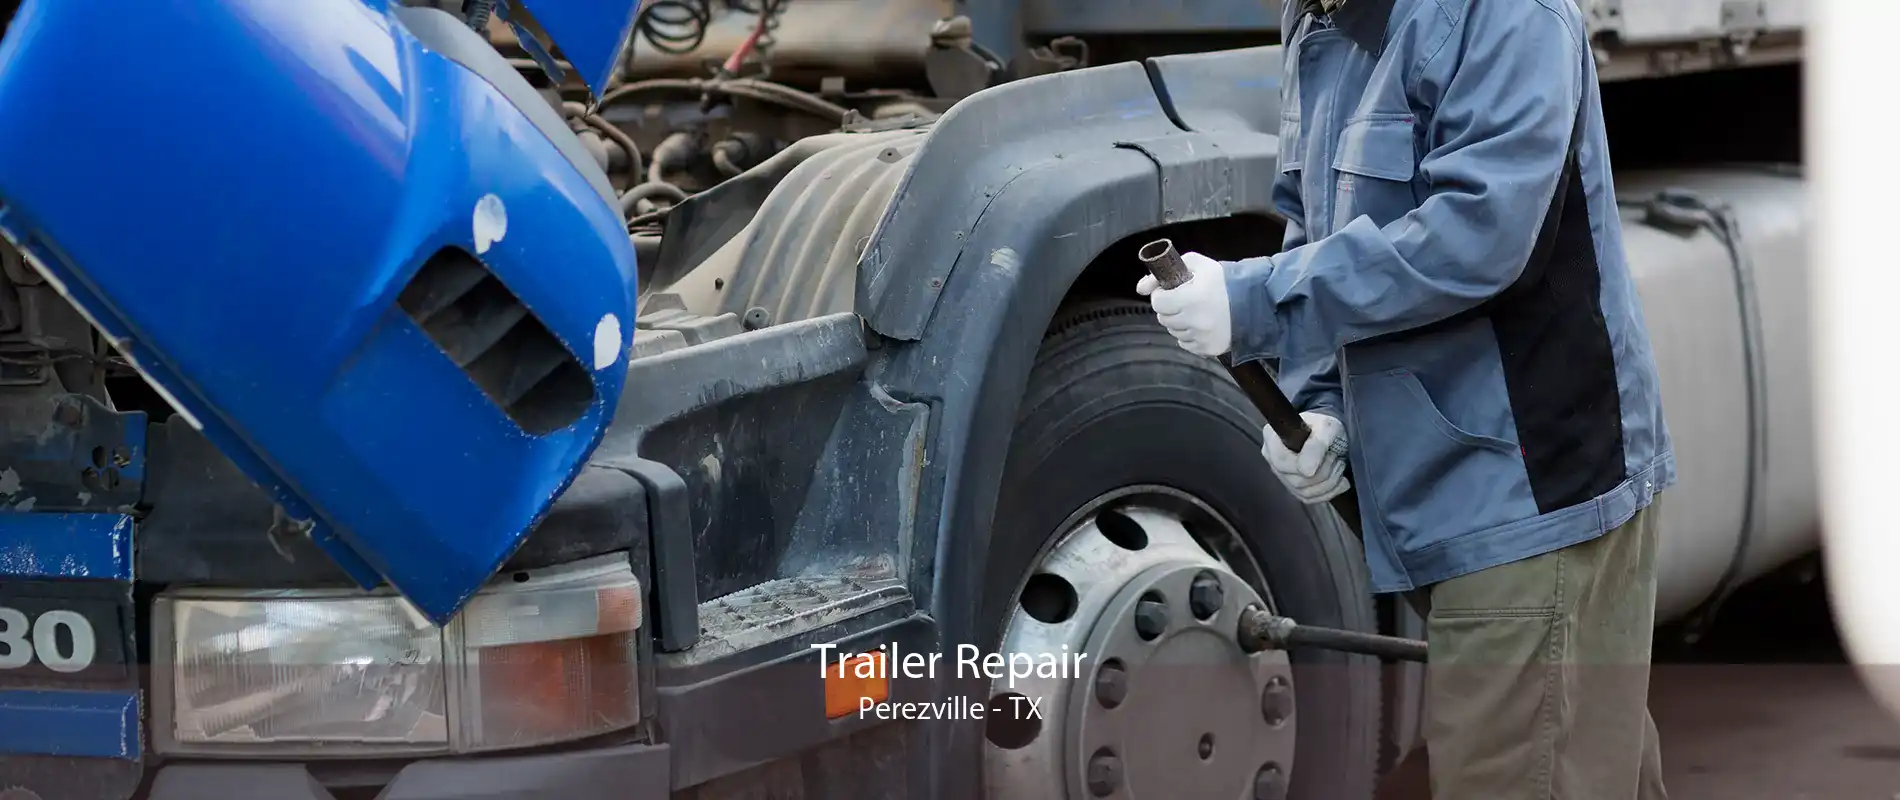 Trailer Repair Perezville - TX